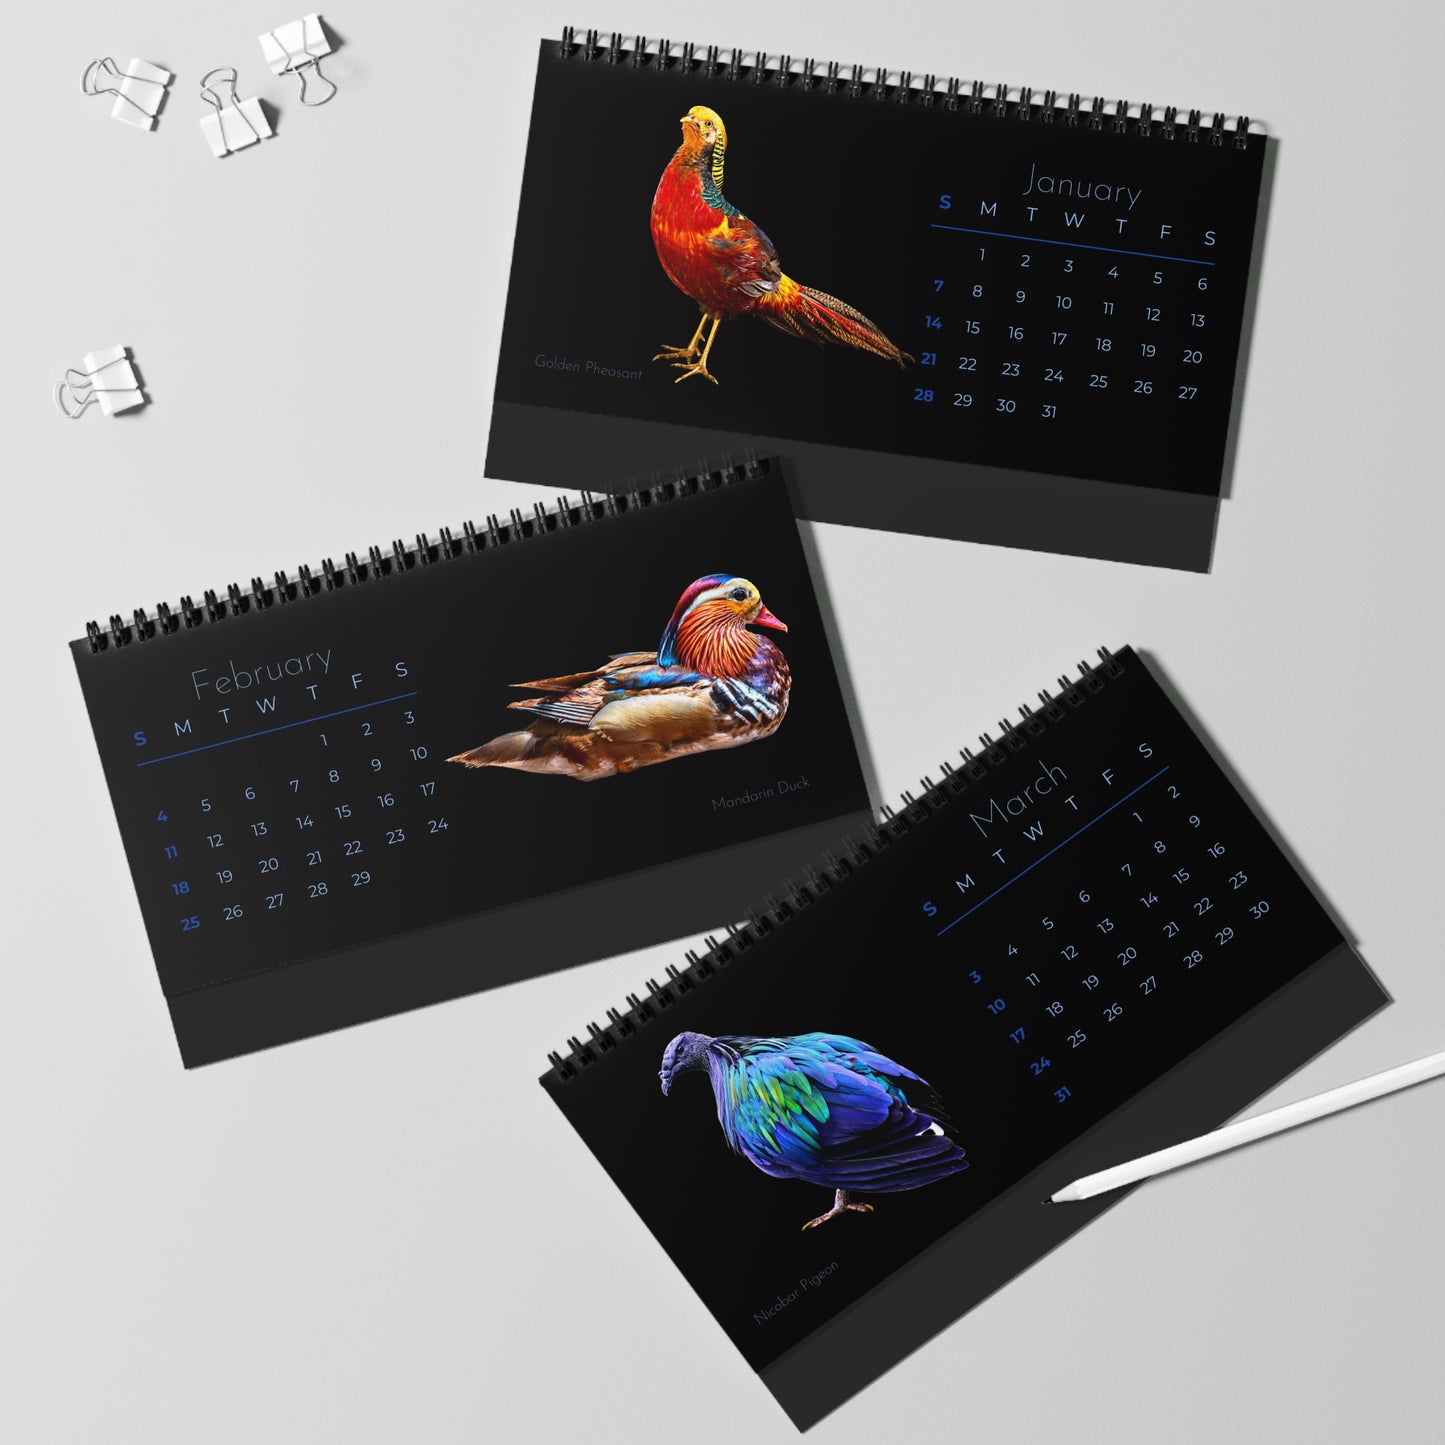 Brilliant Birds of 2024 Desk Calendar